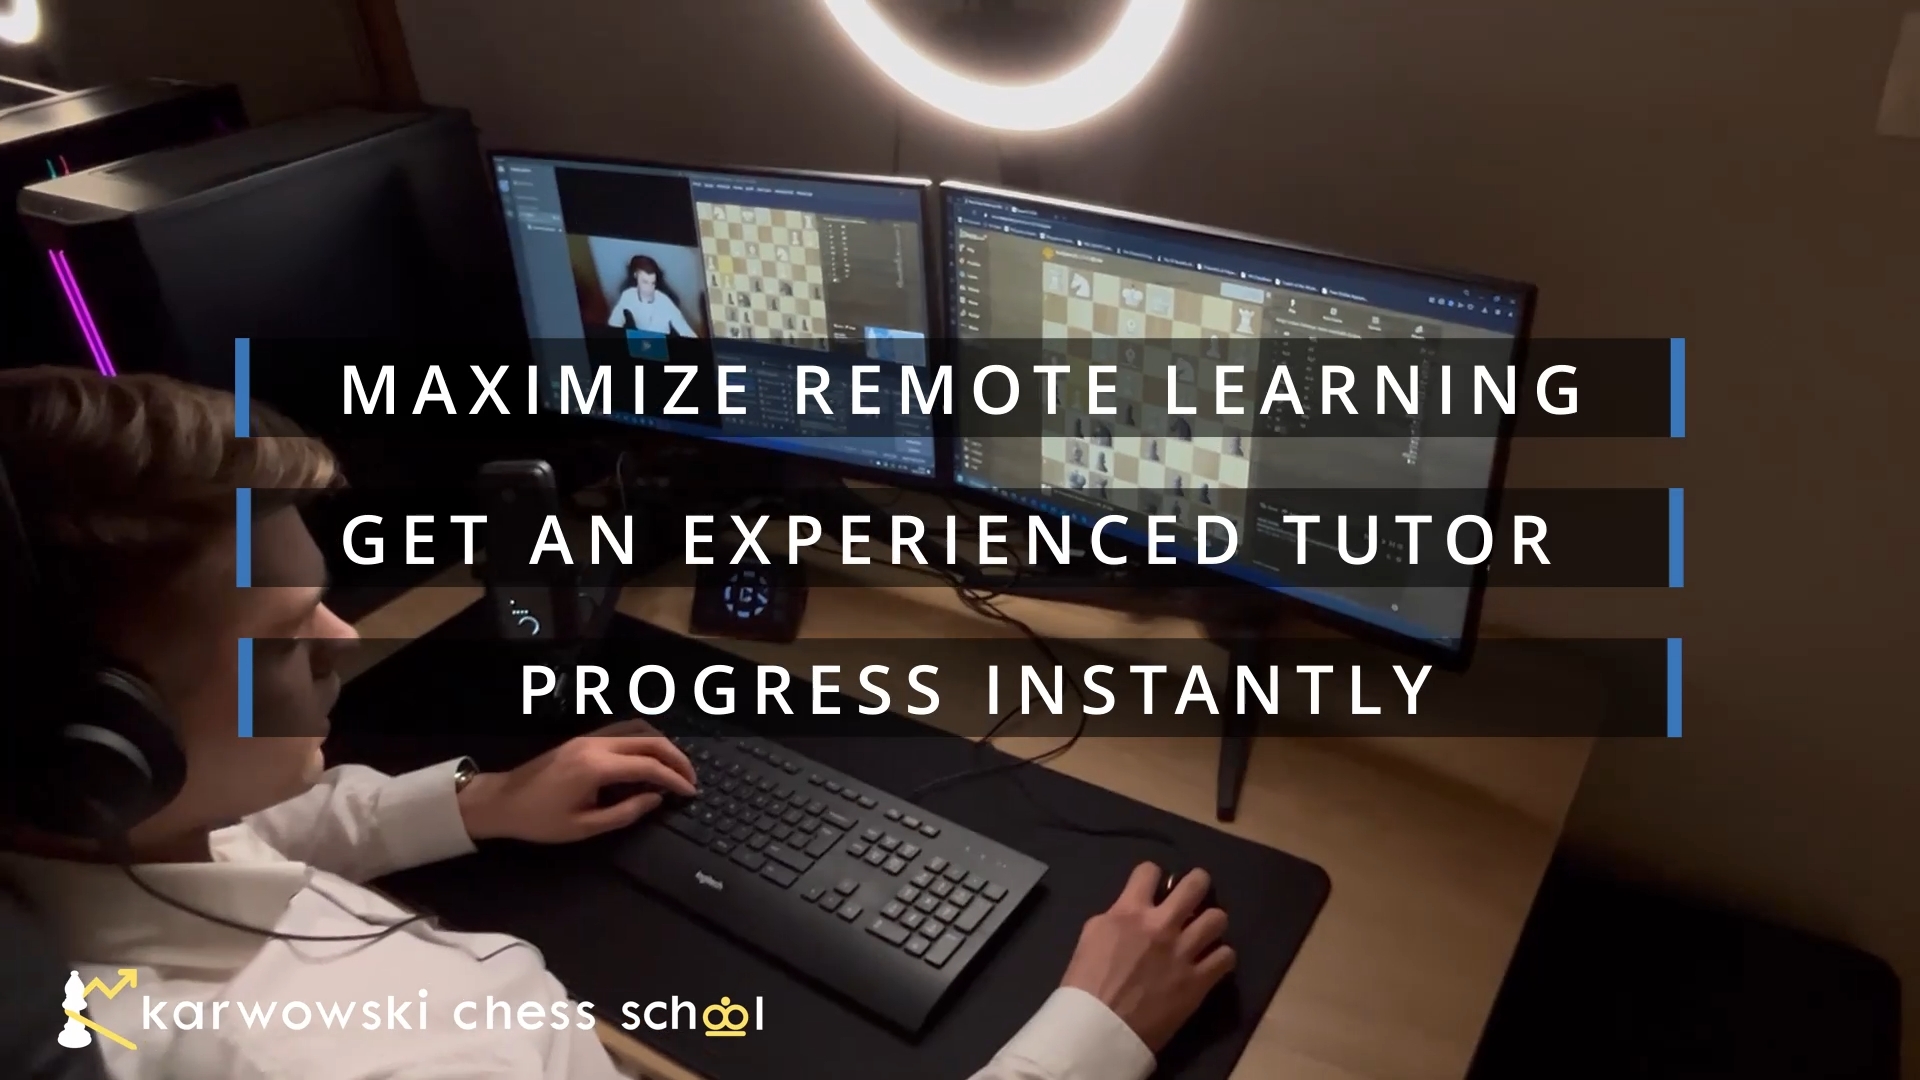 Karwowski Chess School promotional video